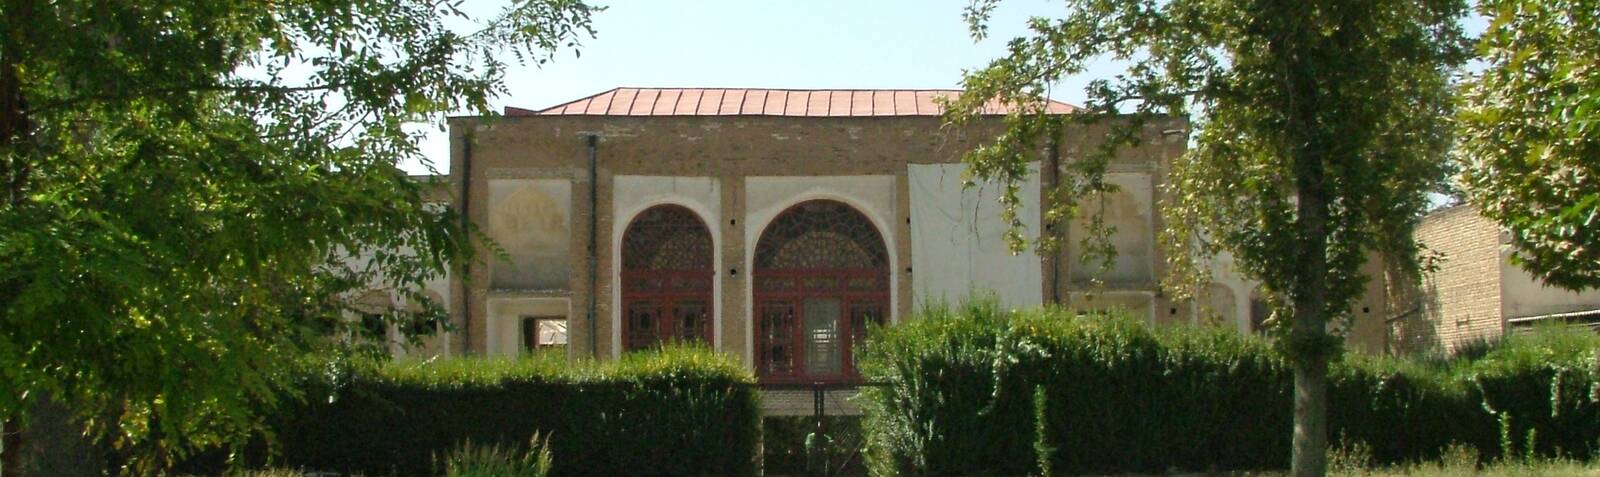 Sulaimaniyah Palace